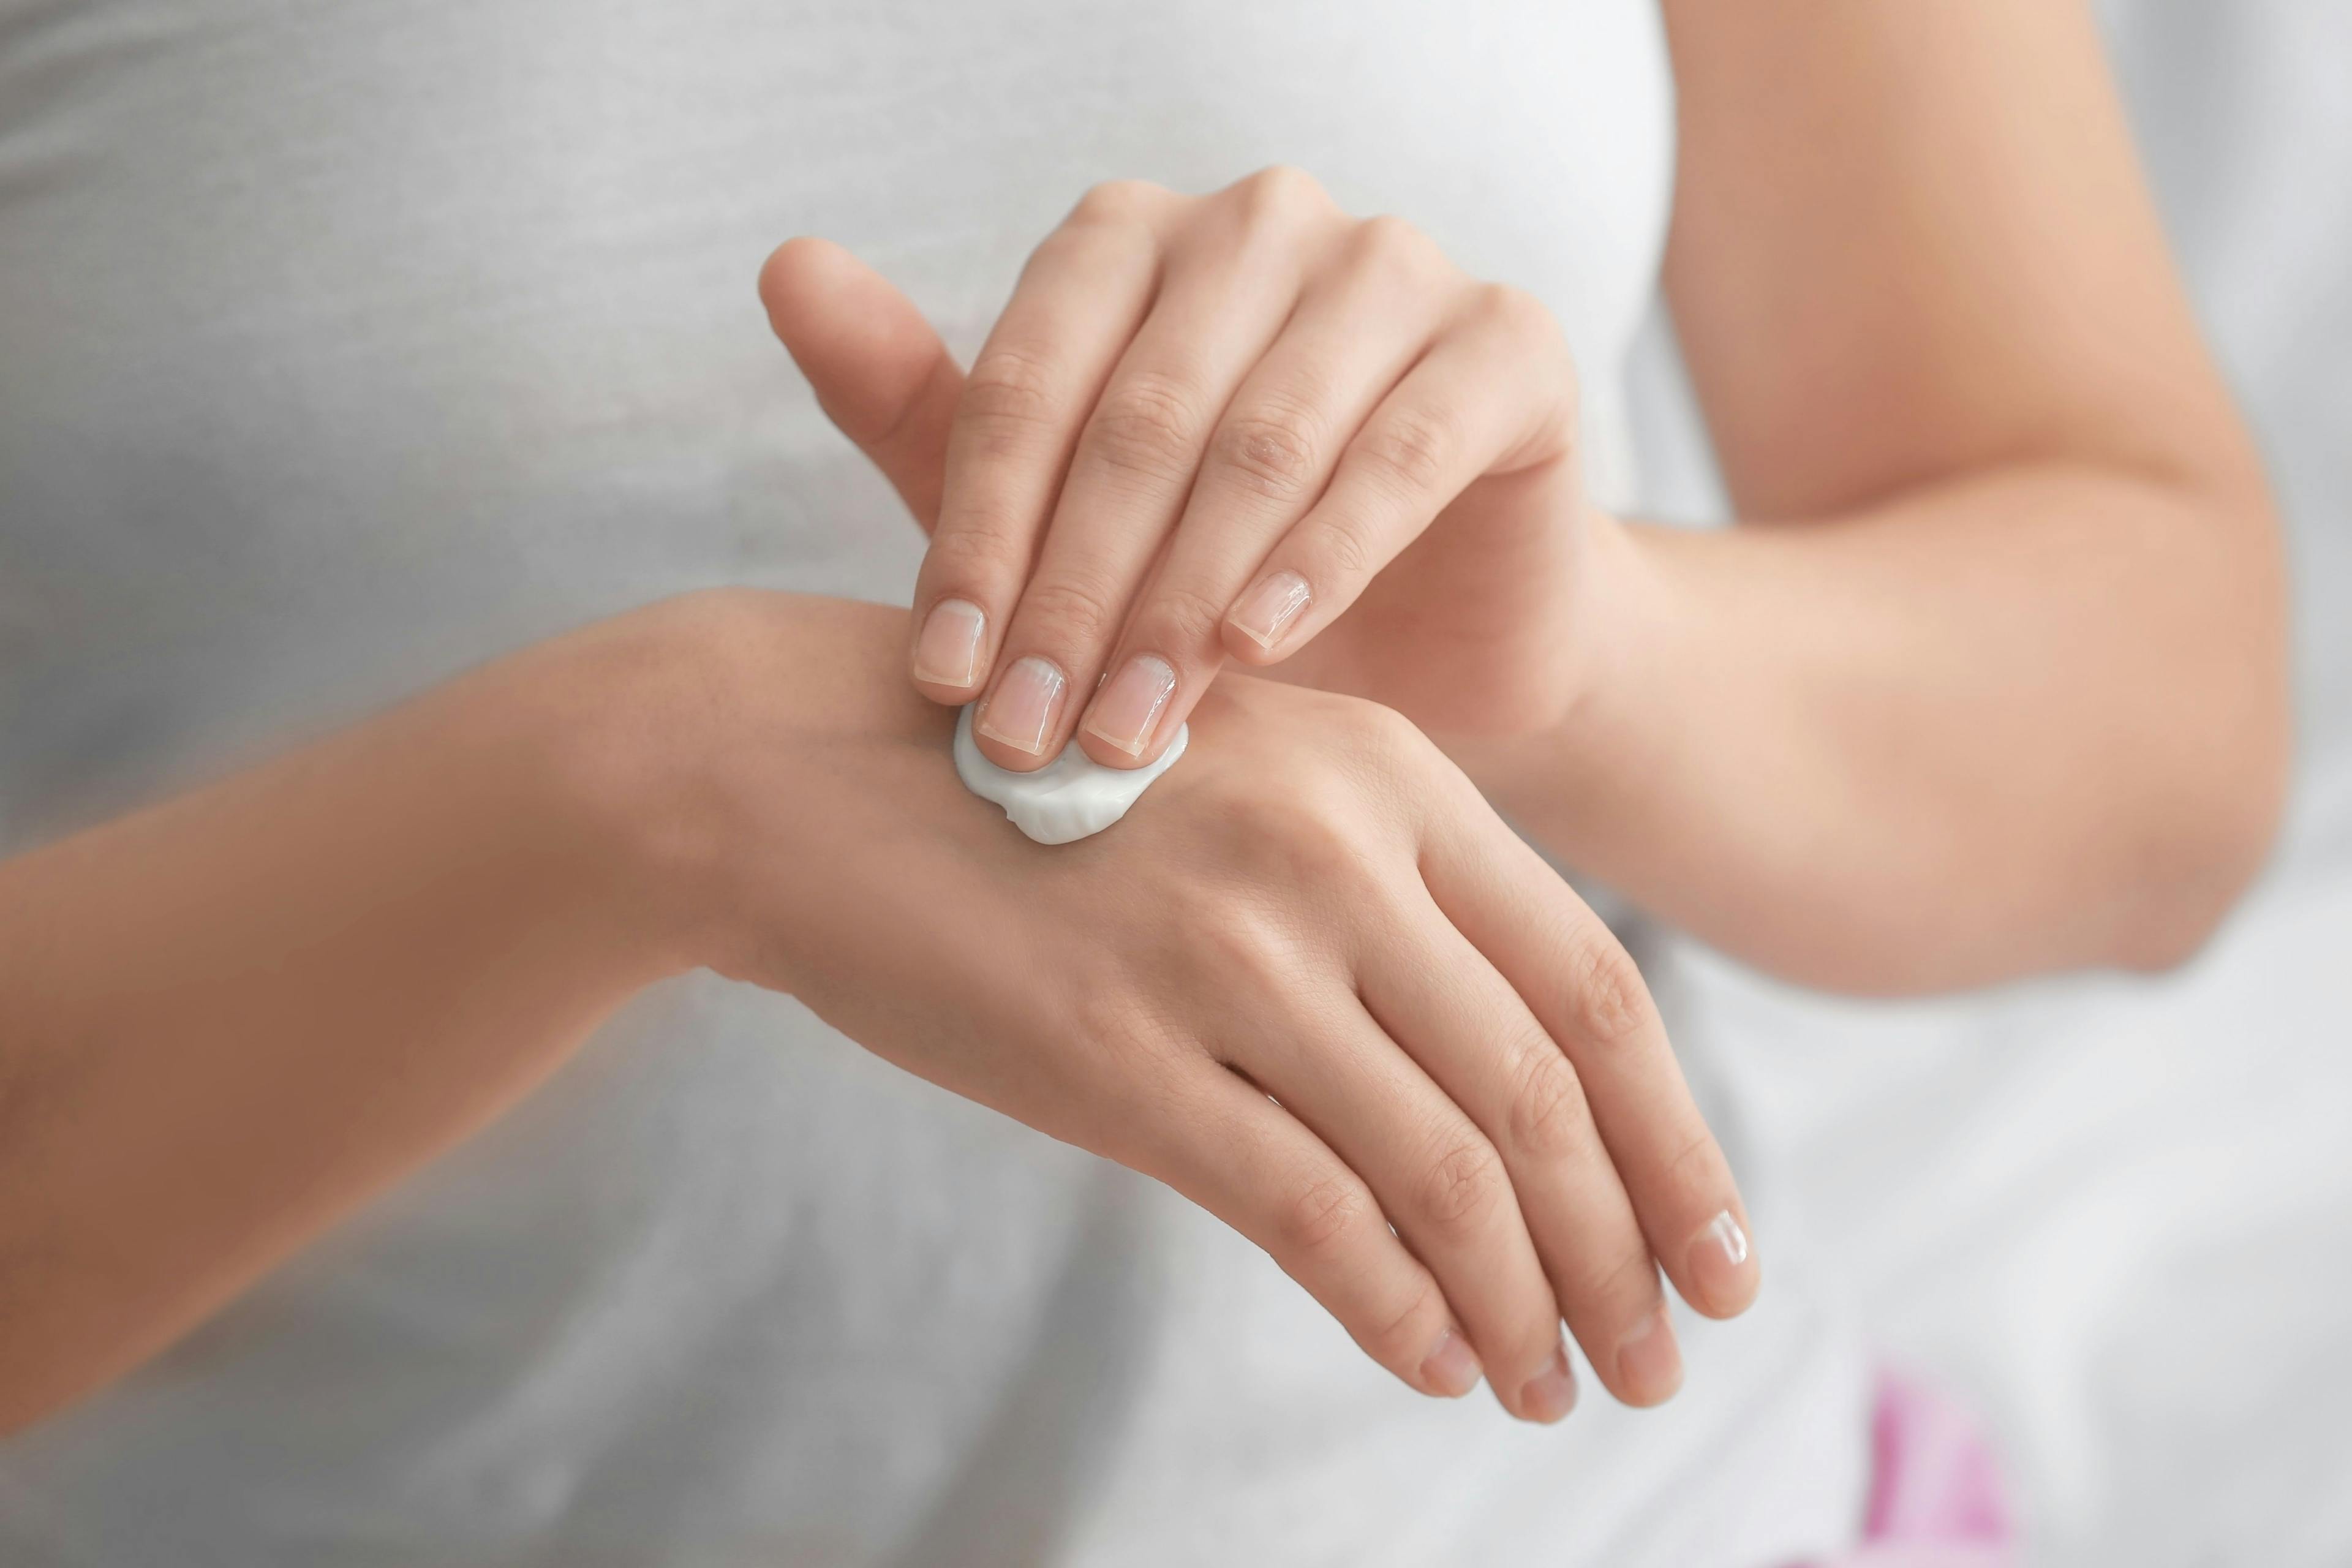 LEO Pharma Announces Positive Results for Delgocitinib Cream for Chronic Hand Eczema